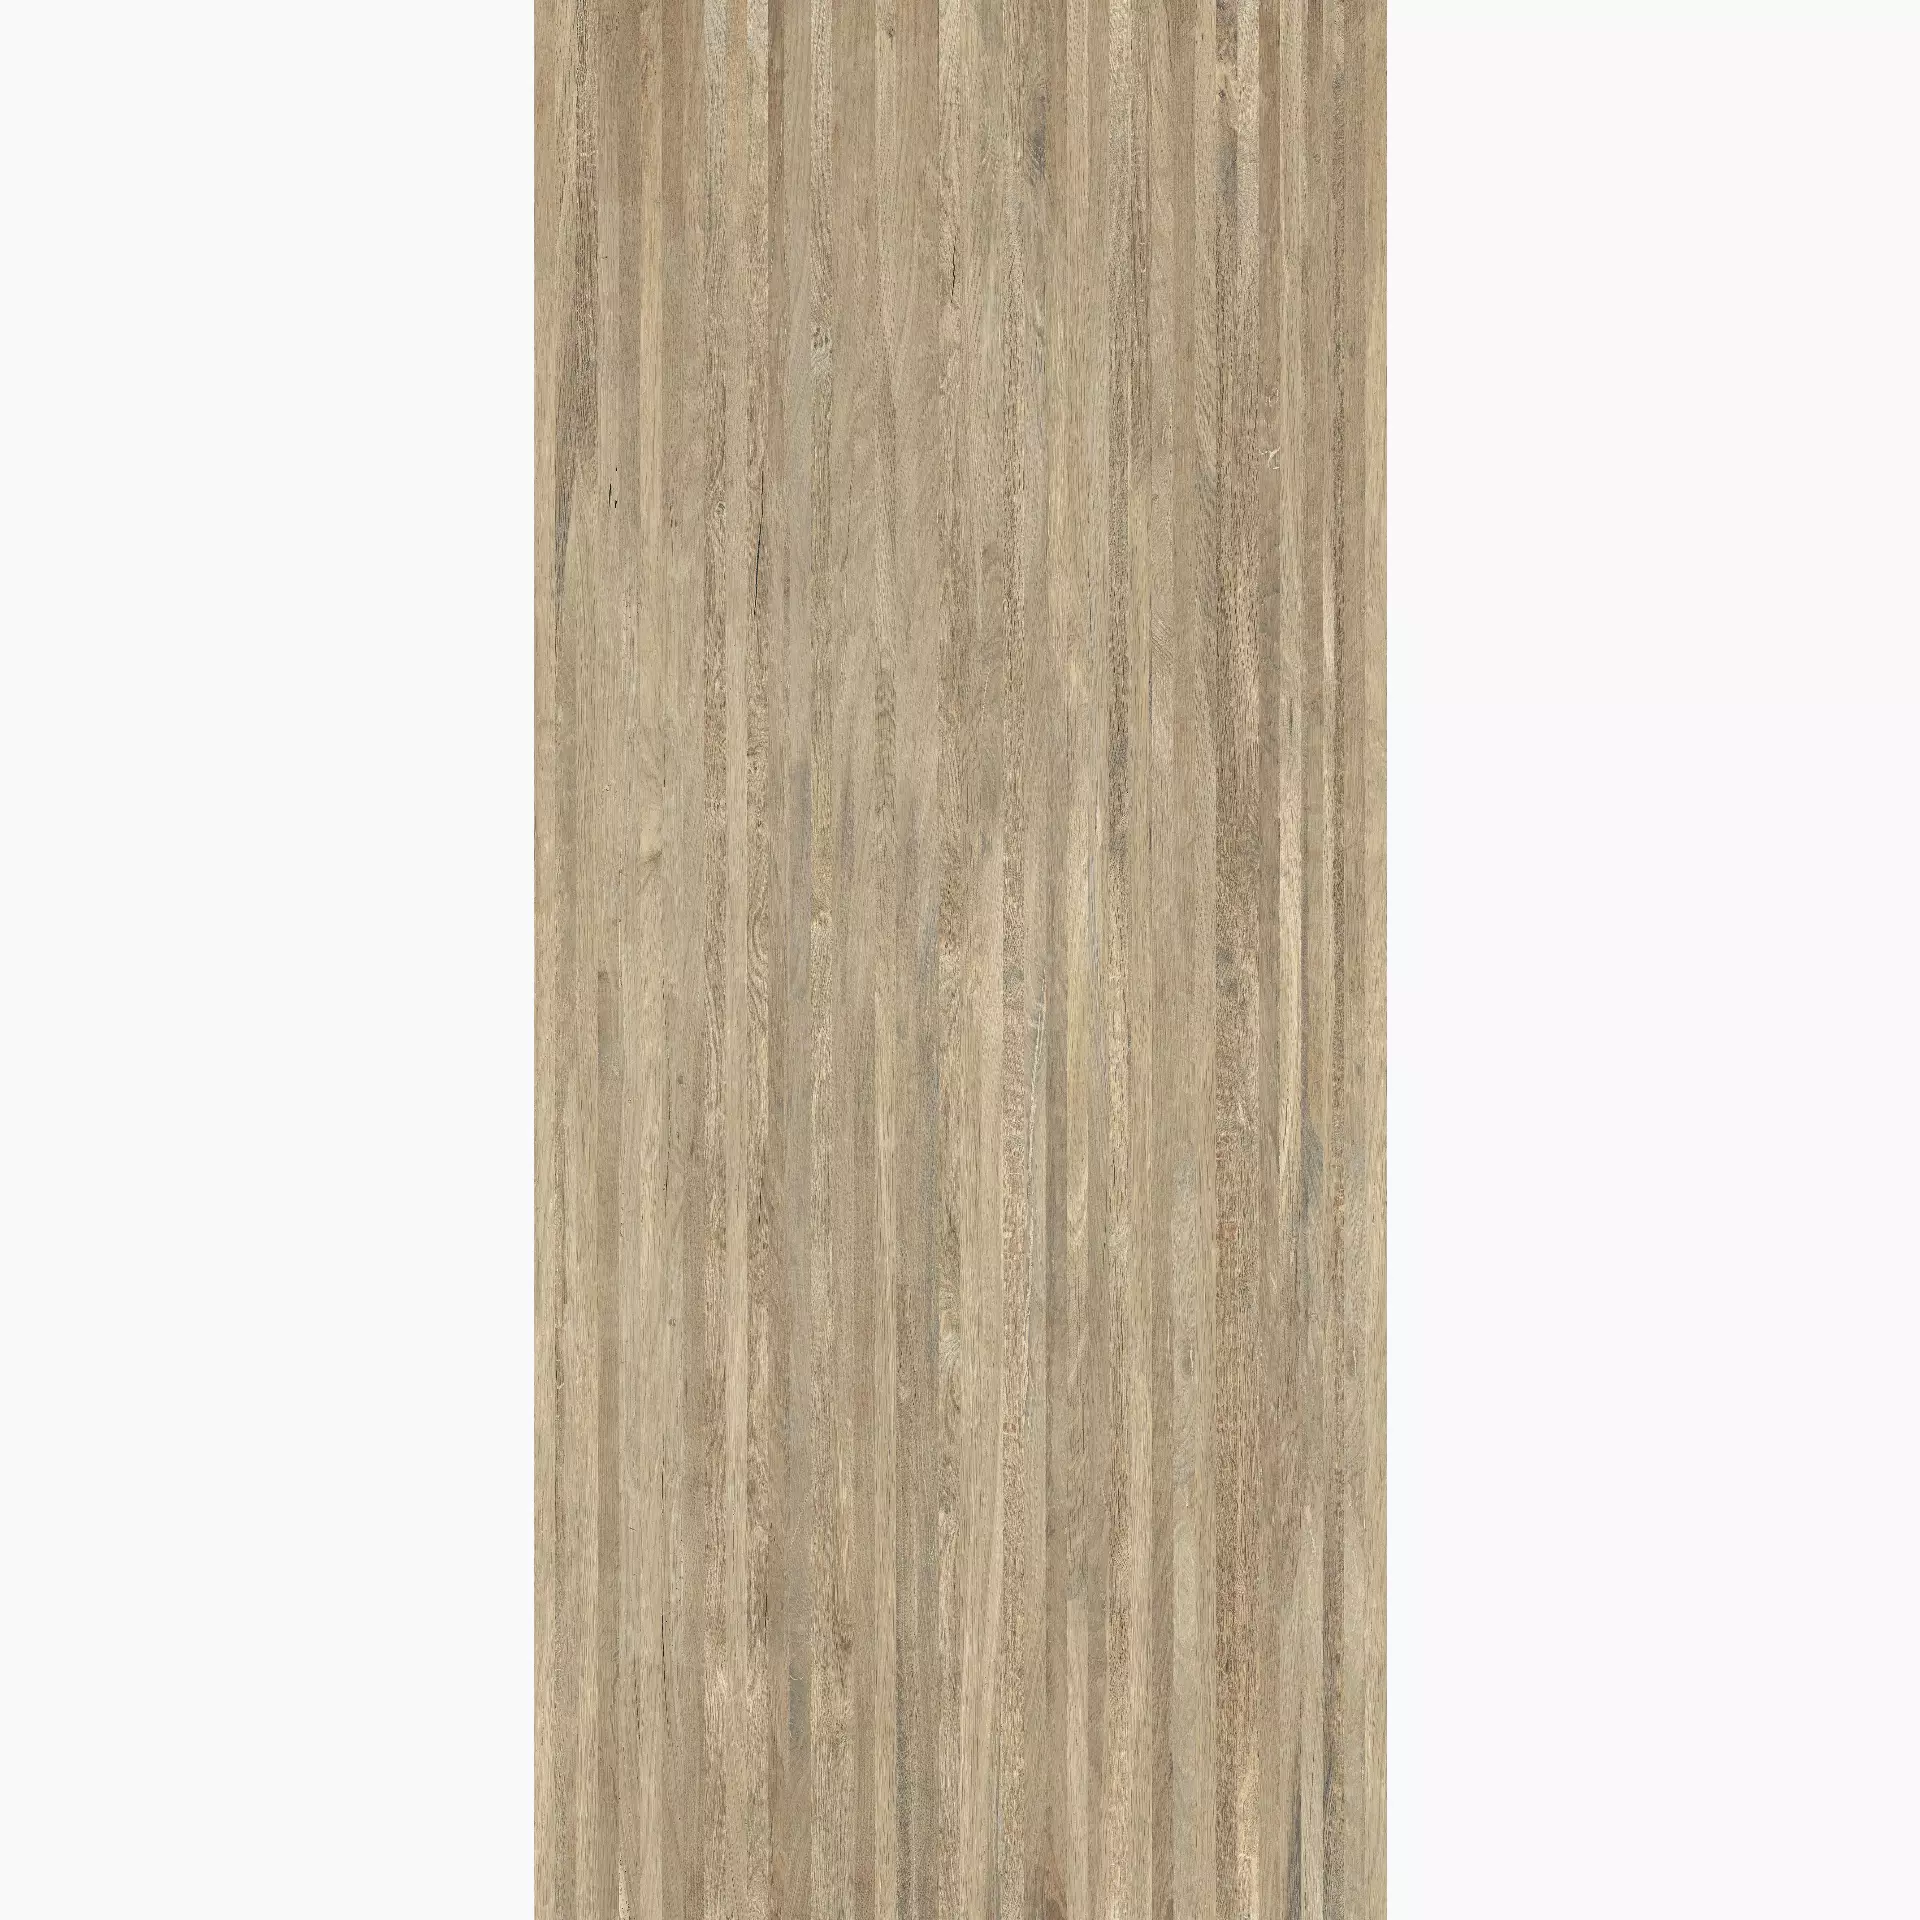 Fondovalle Woodblock Brave Stripy Oak 3D Real Matt Decor Stripy WOB013 120x278cm rectified 6,5mm